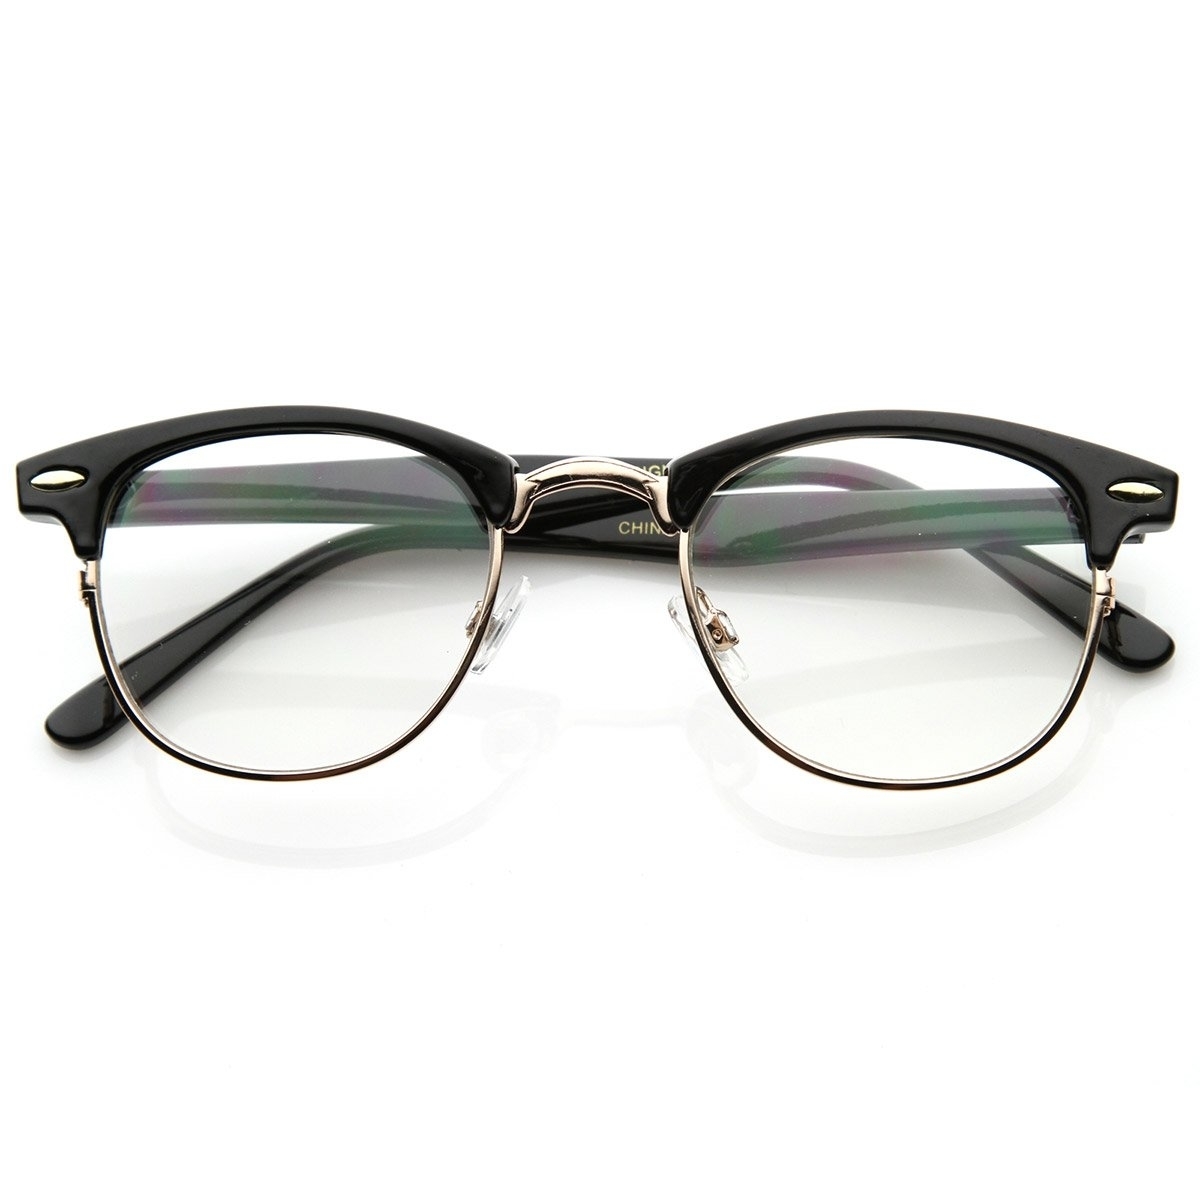 Optical Quality Horned Rim Clear Lens RX'able Half Frame Horn Rimmed Glasses - Tortoise-Gold